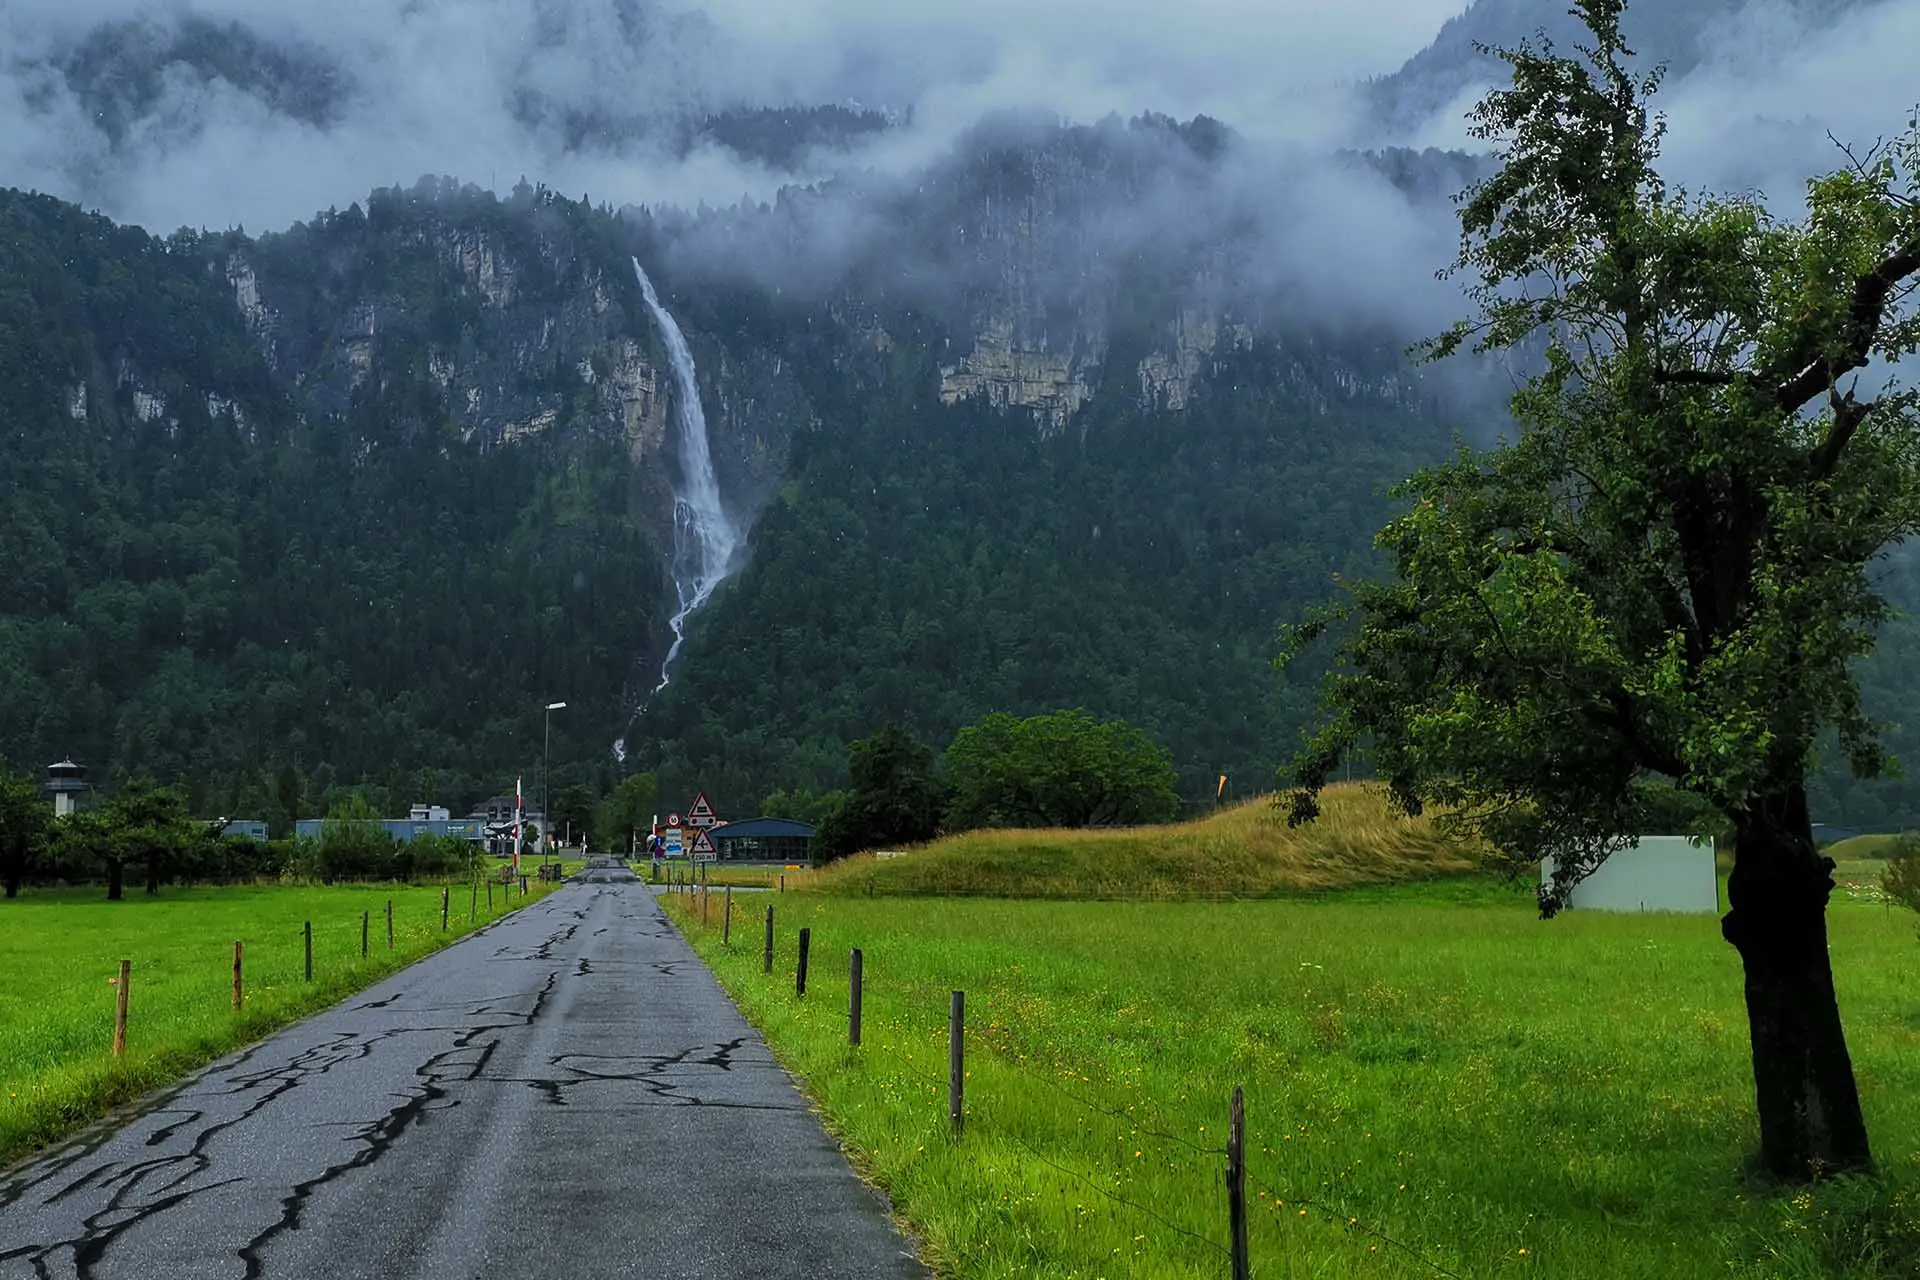 Öltschibach Falls in Meiringen is one of the most viral waterfalls in Switzerland thanks to Instagram.